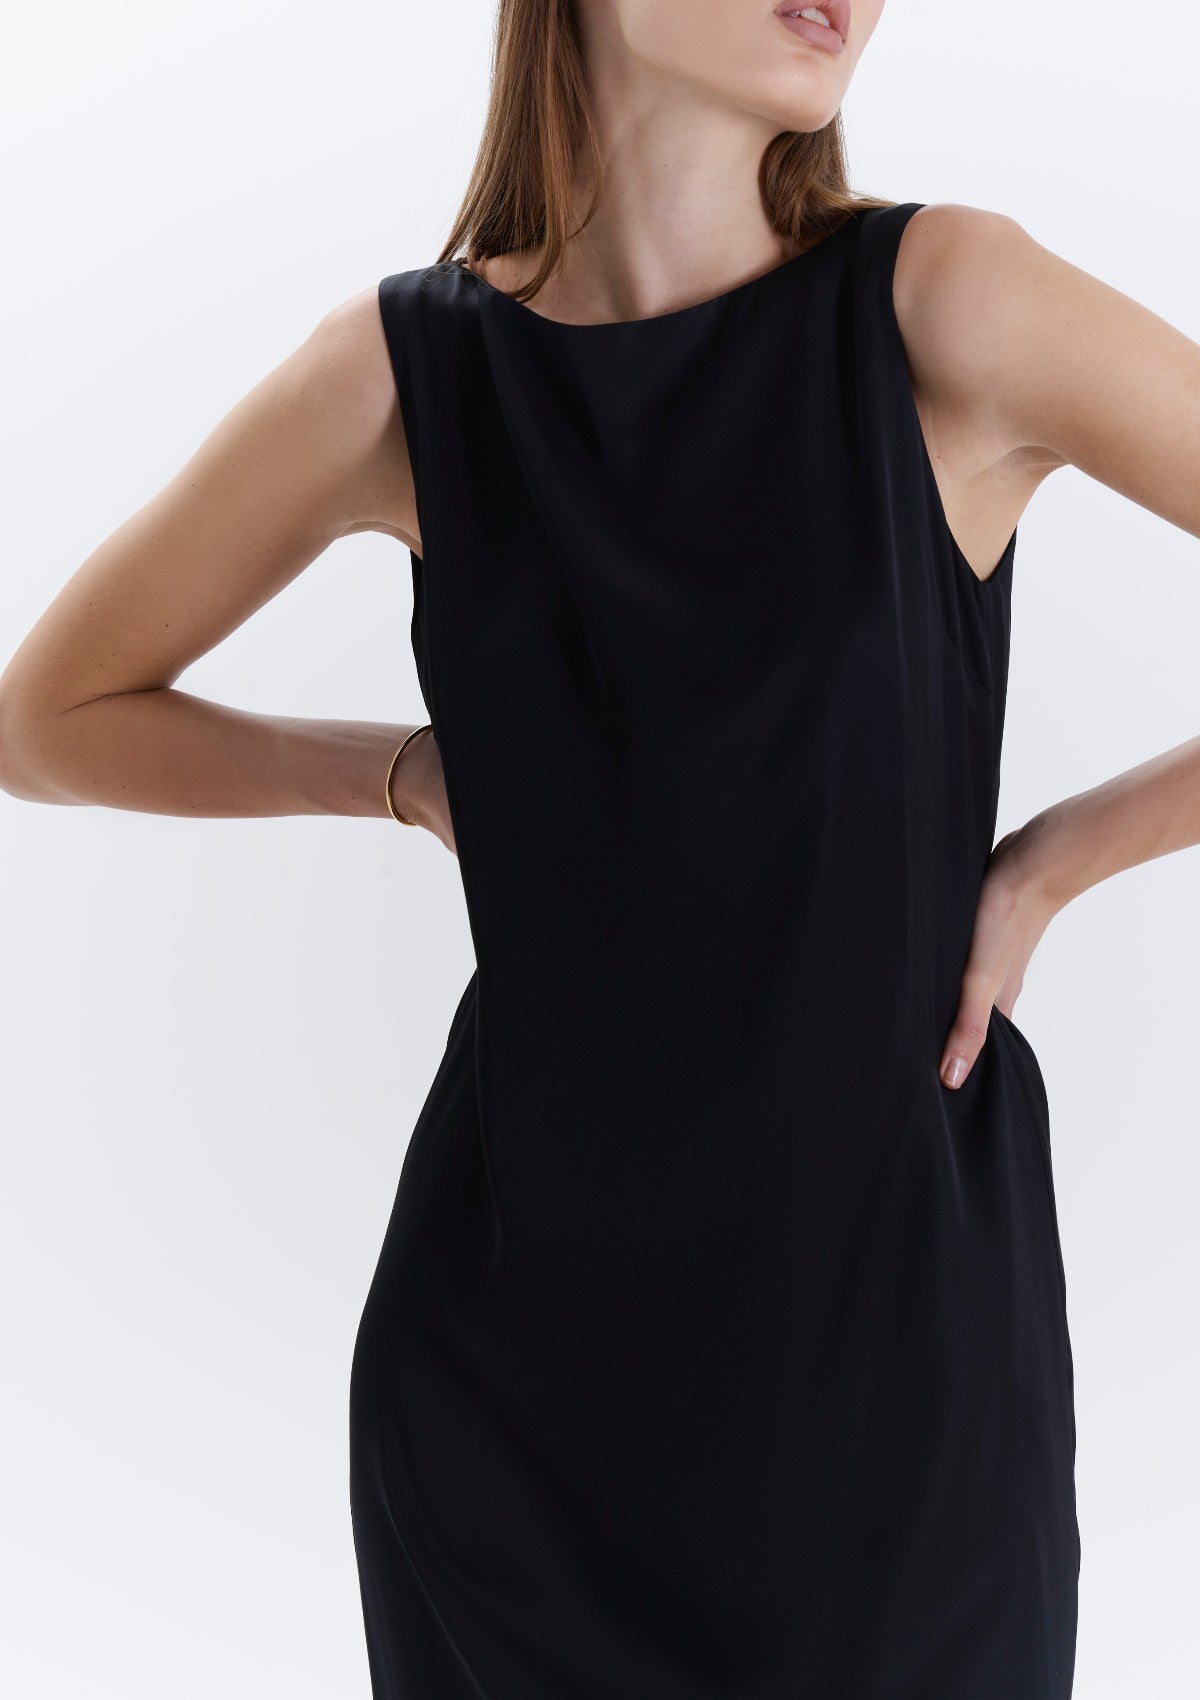 timeless-style-midi-black-dress-by Silk & tonic fashion brand